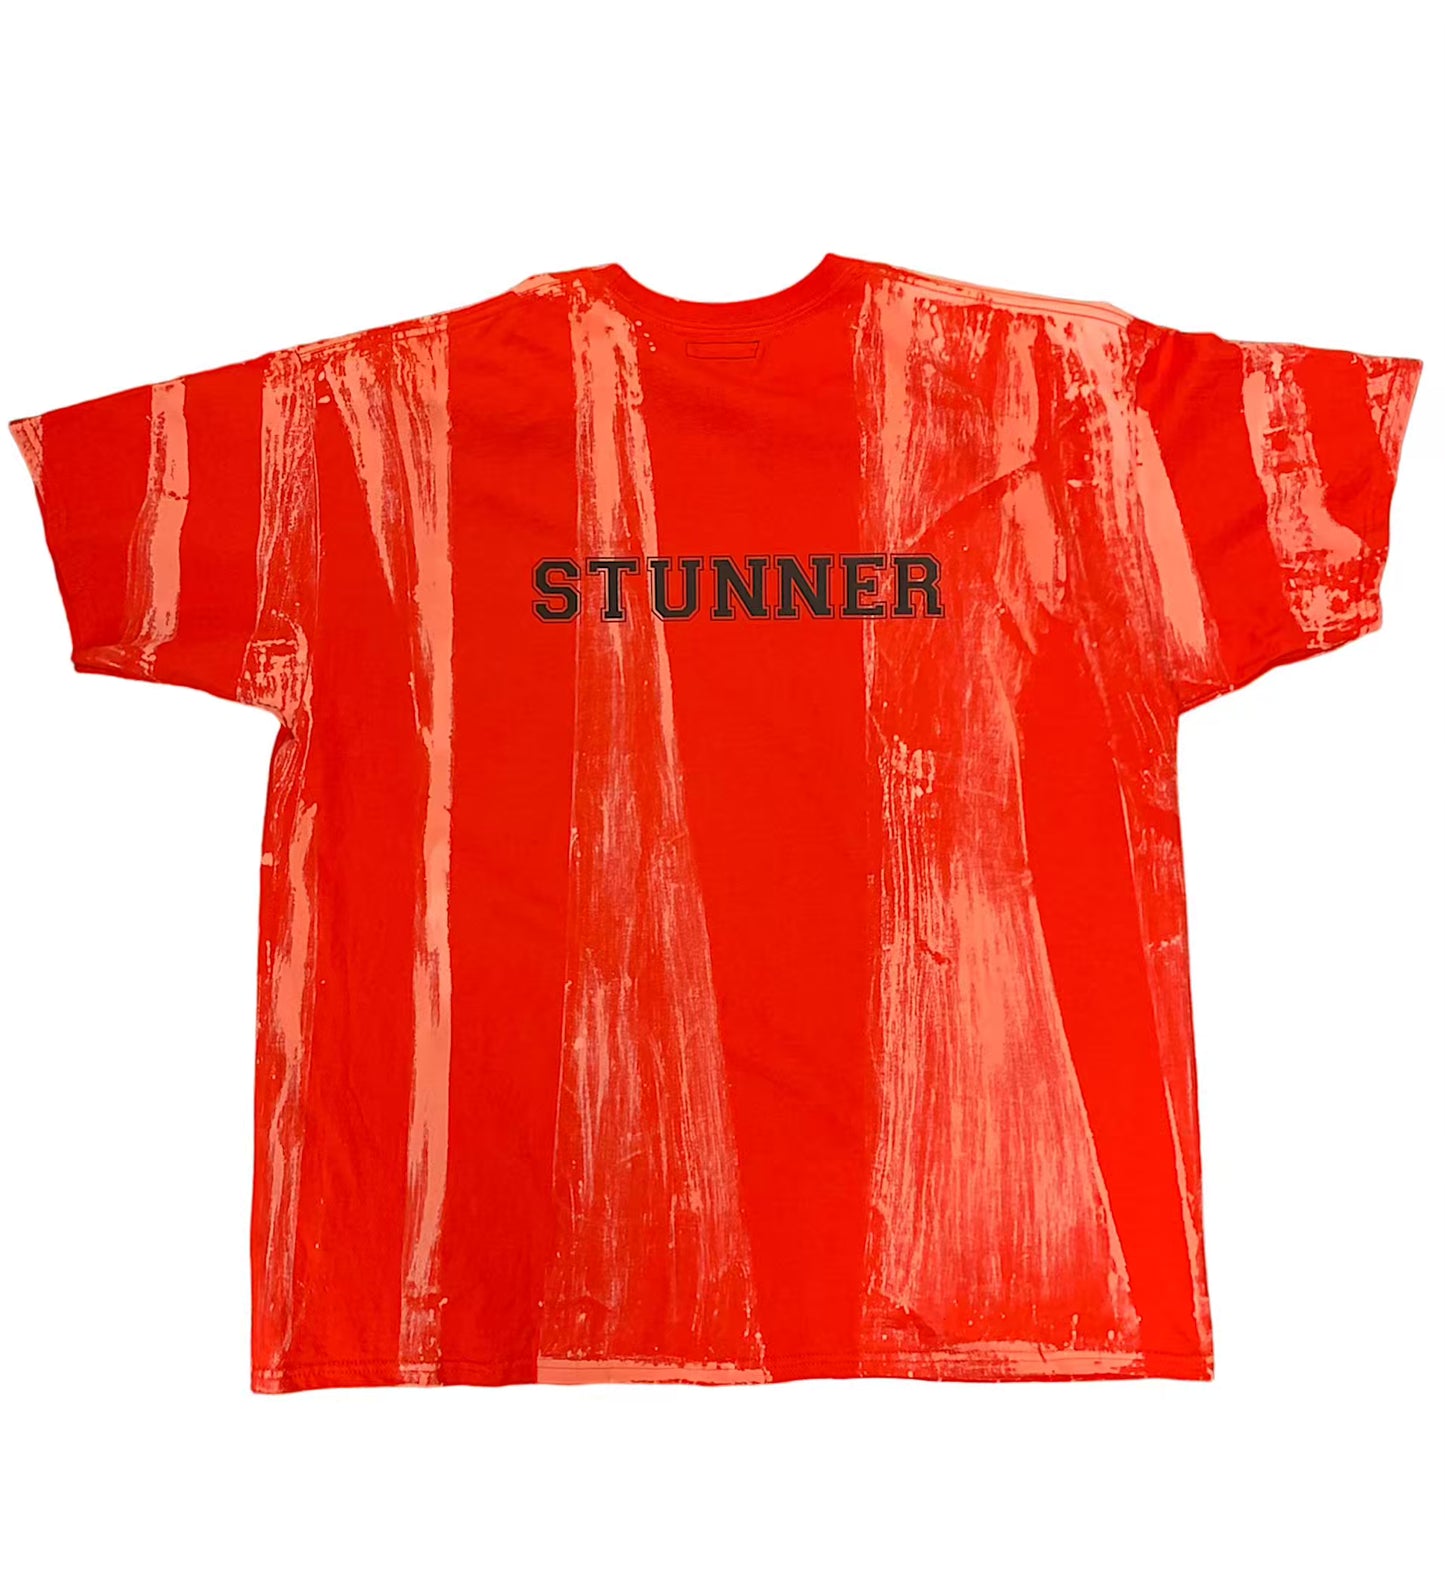 Partxis Red XXL T-shirt